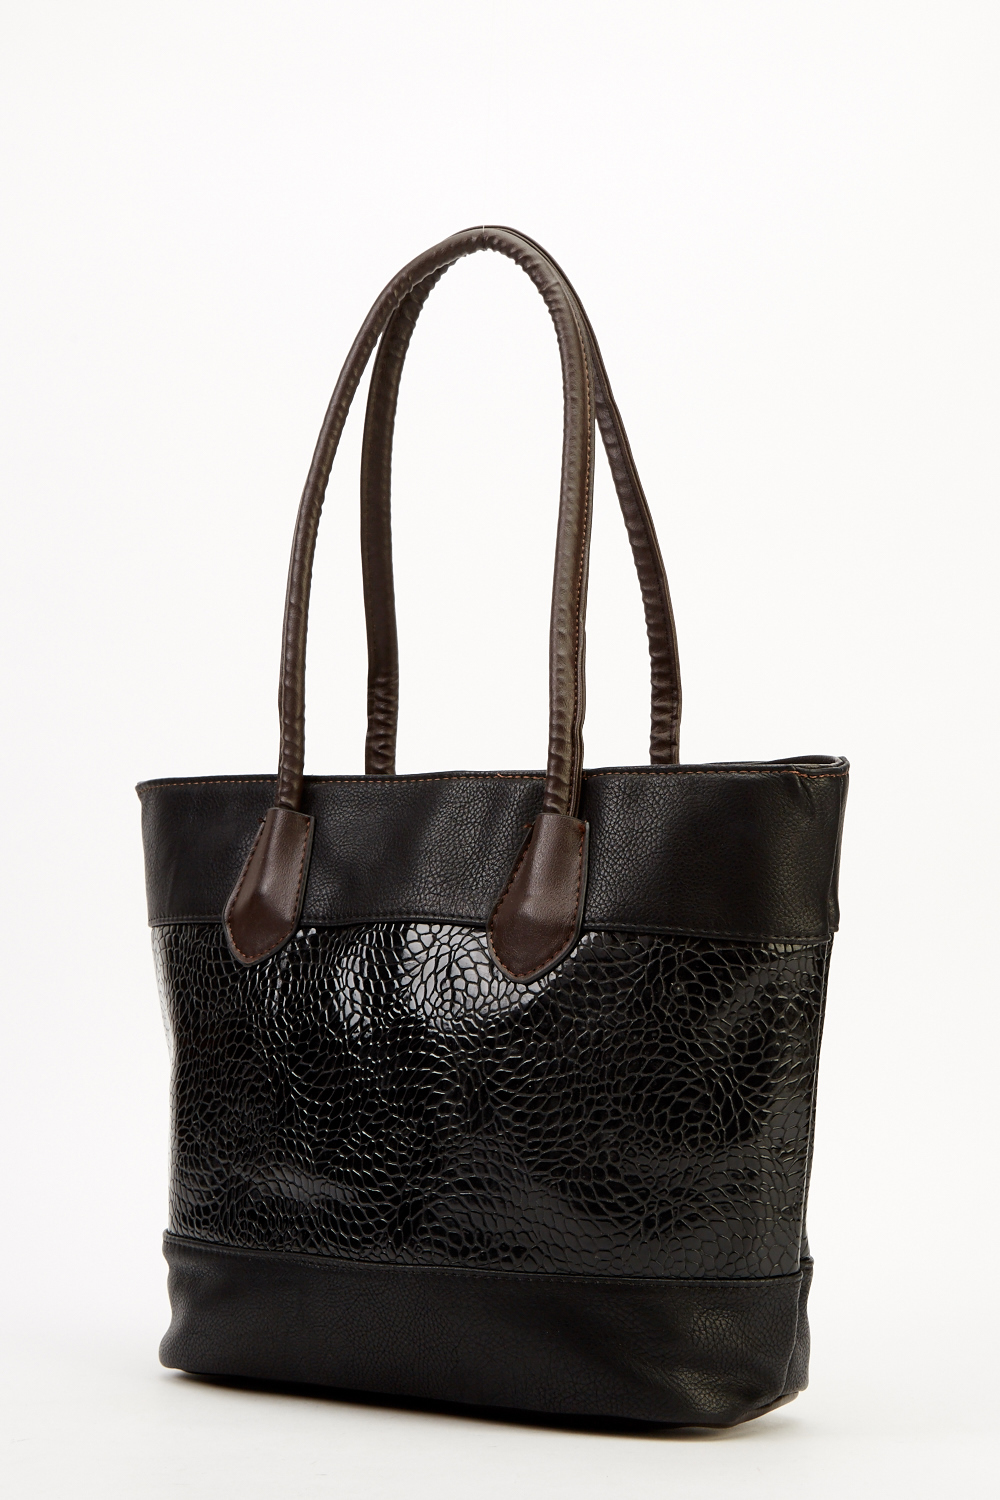 Download Mock Croc Faux Leather Handbag - Just $6